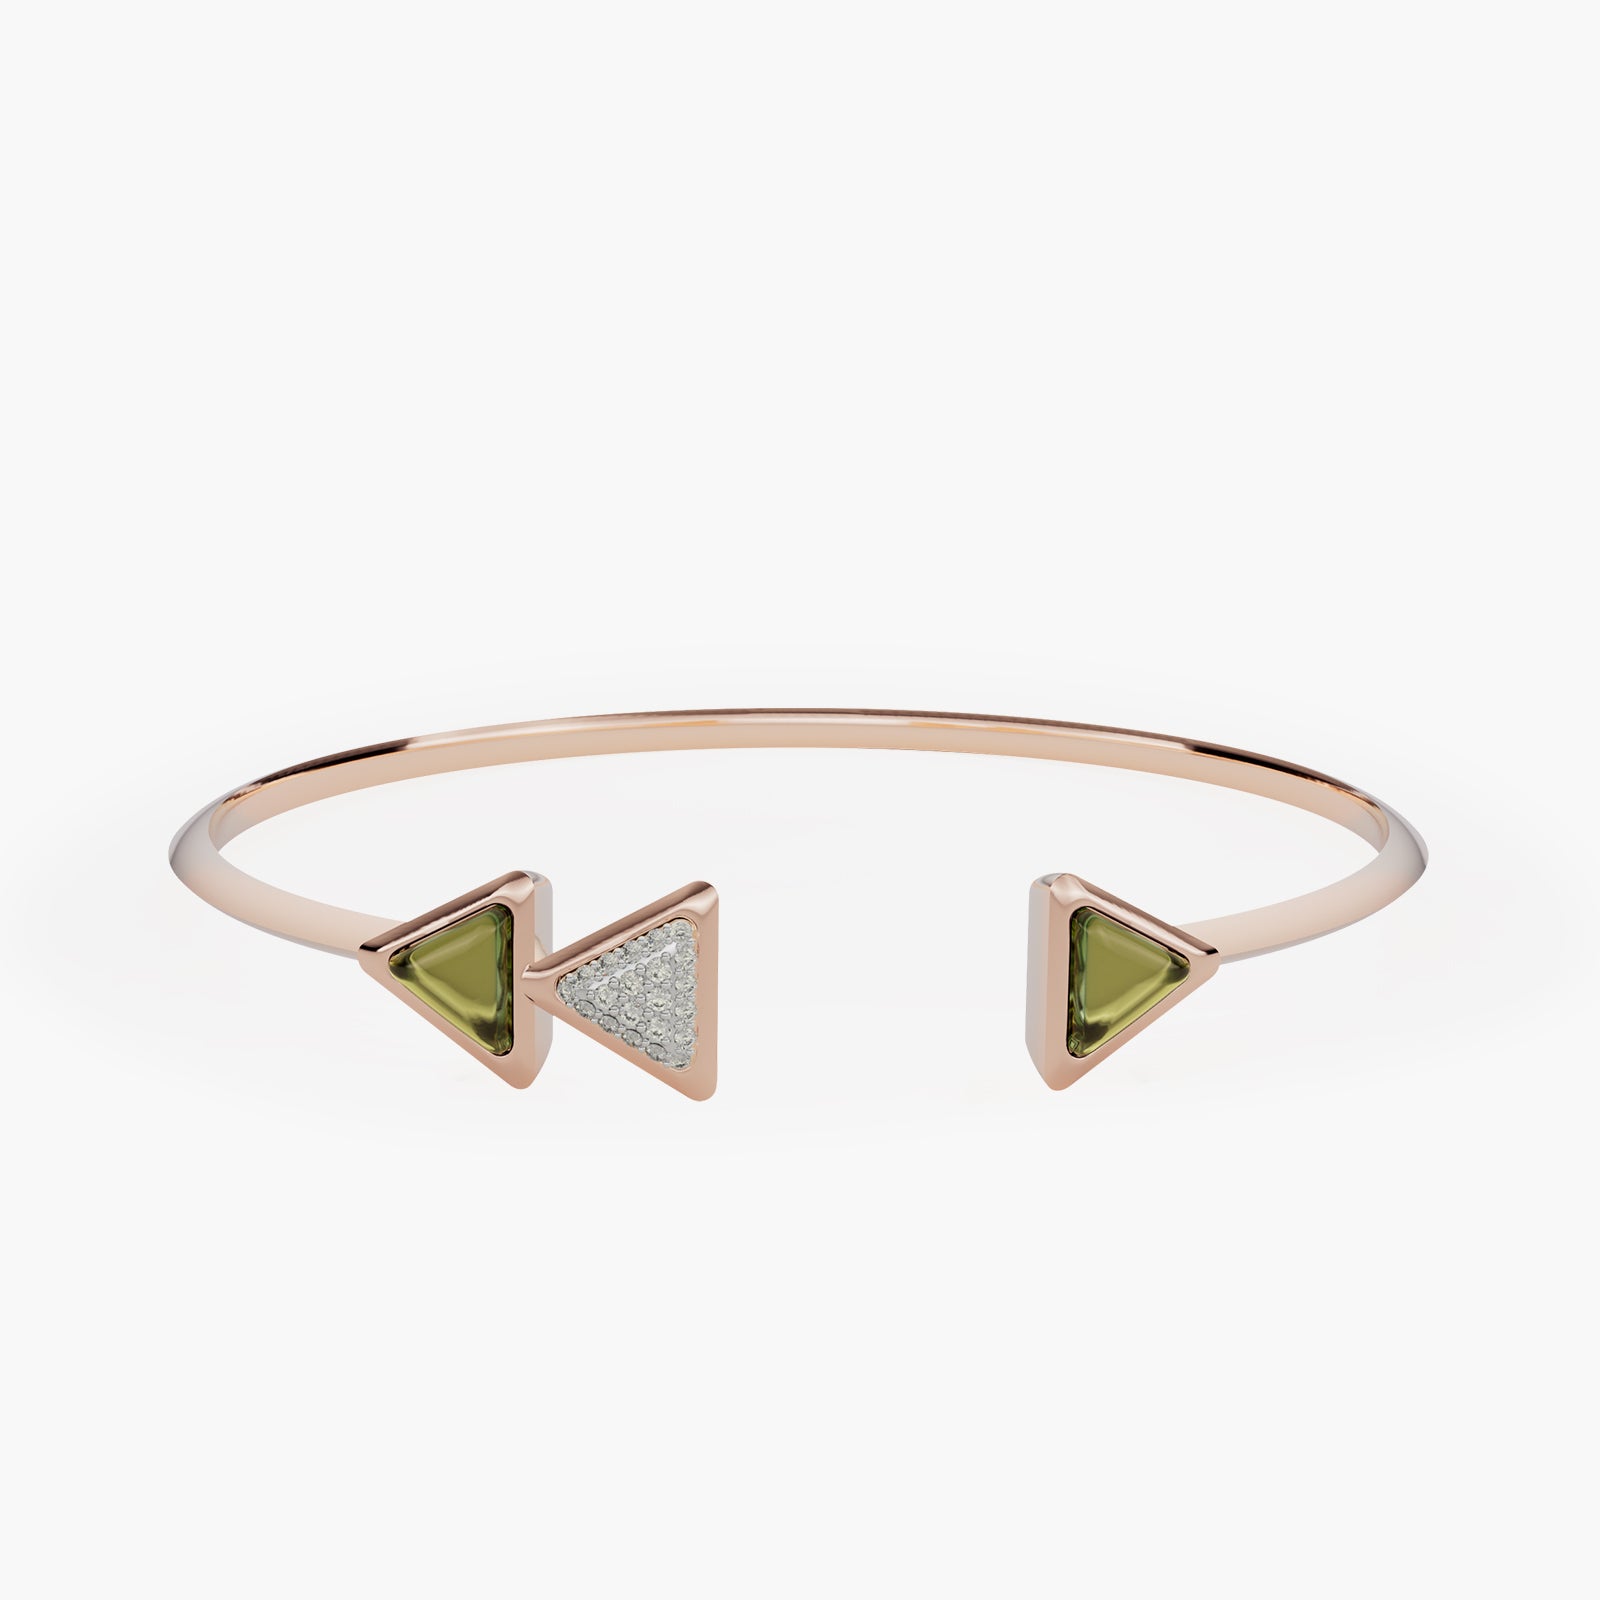 Bracelet Dove Vai Rewind Exquisite Rose Gold Green Tourmaline and Diamonds